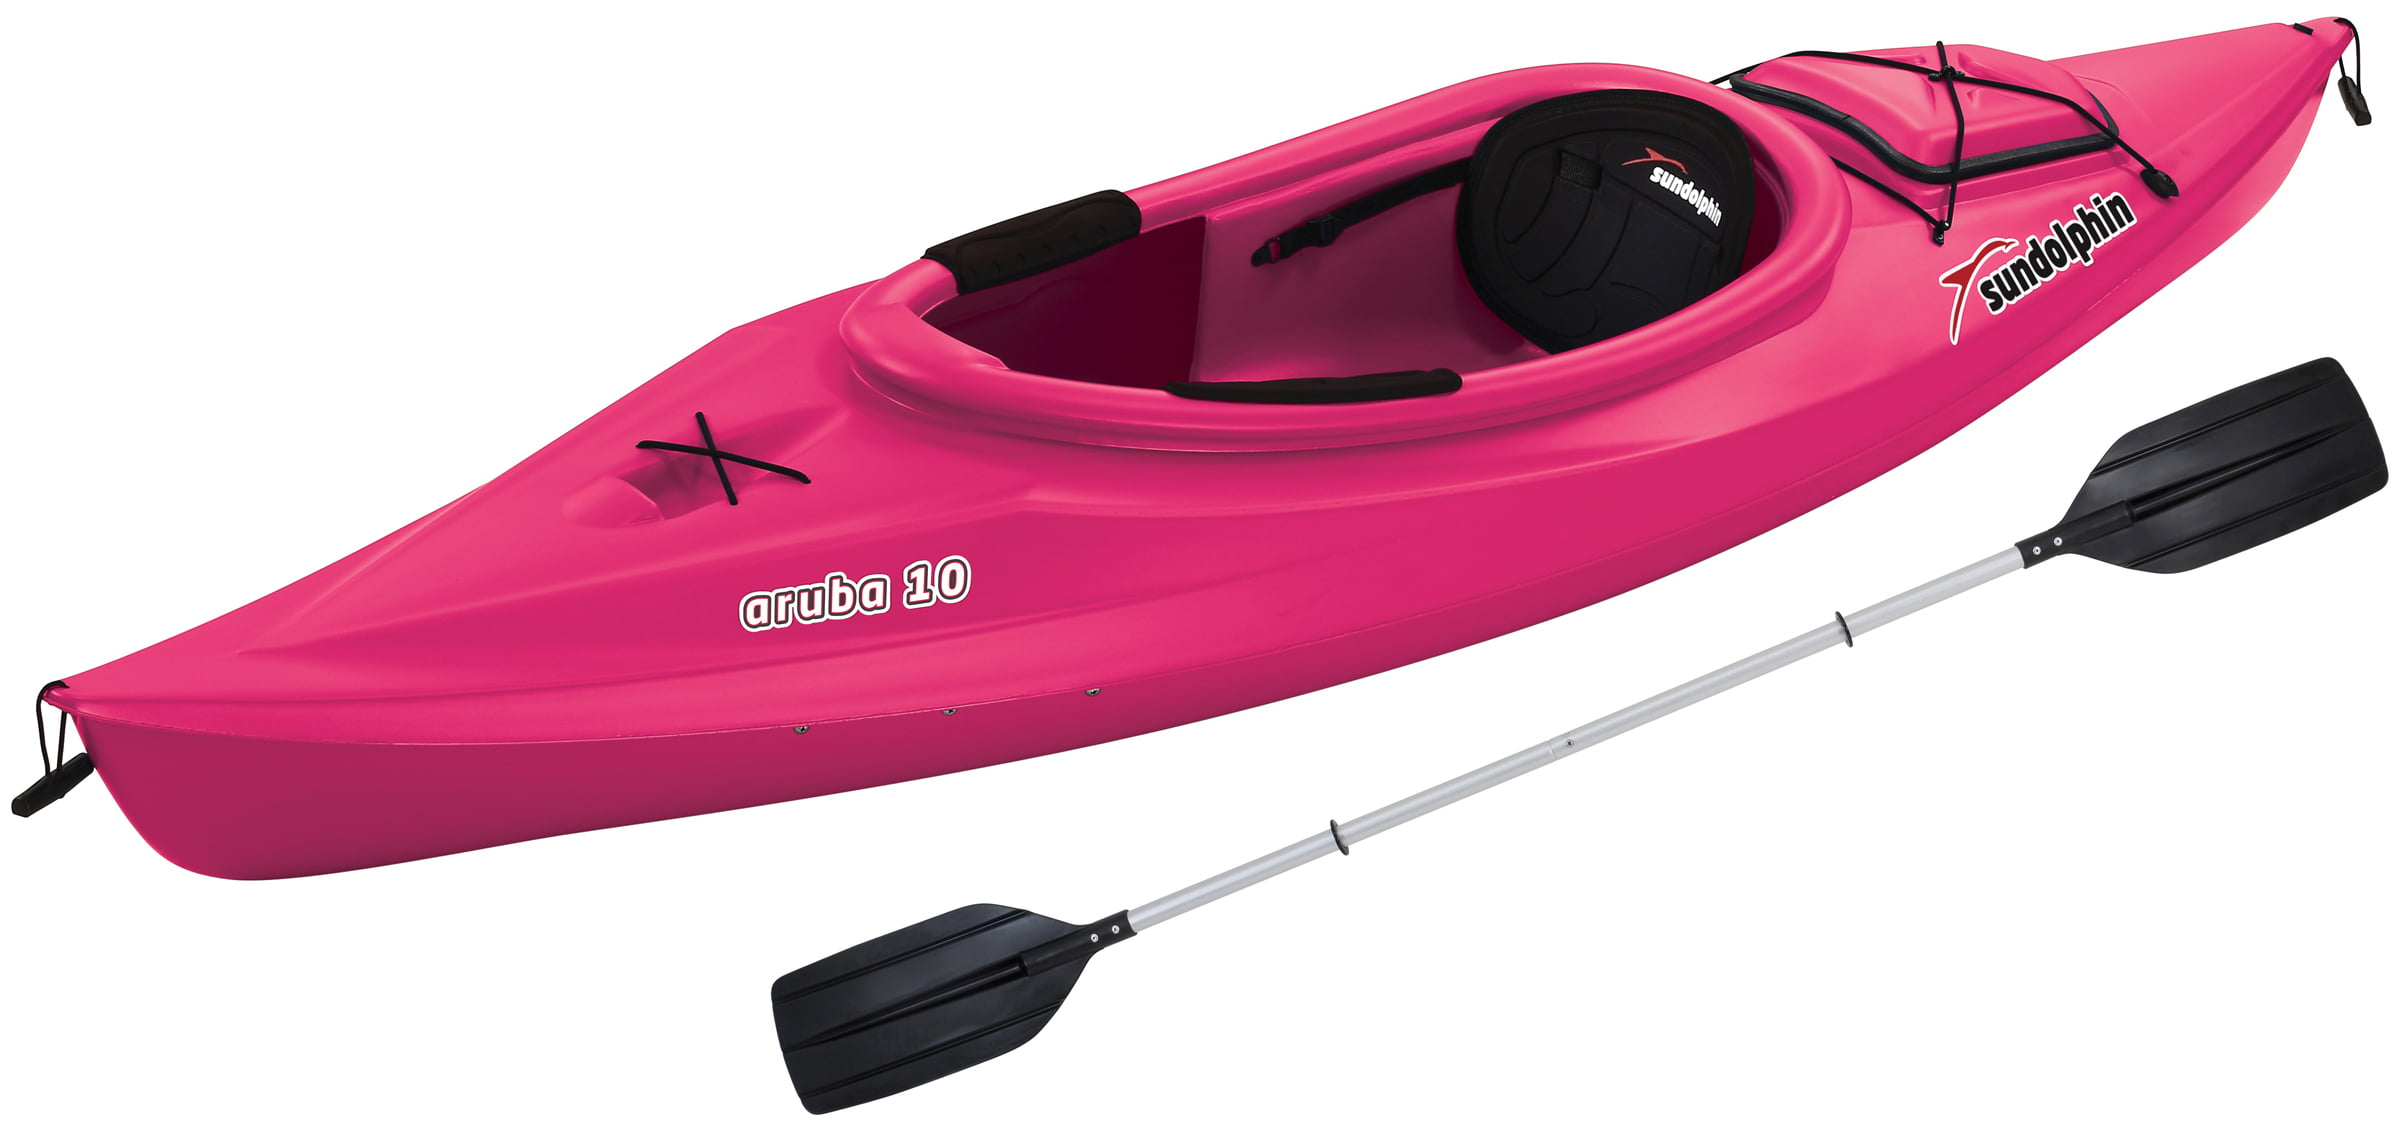 Sun Dolphin Aruba 10' Sit In Kayak Pink, Paddle Included - Walmart.com...